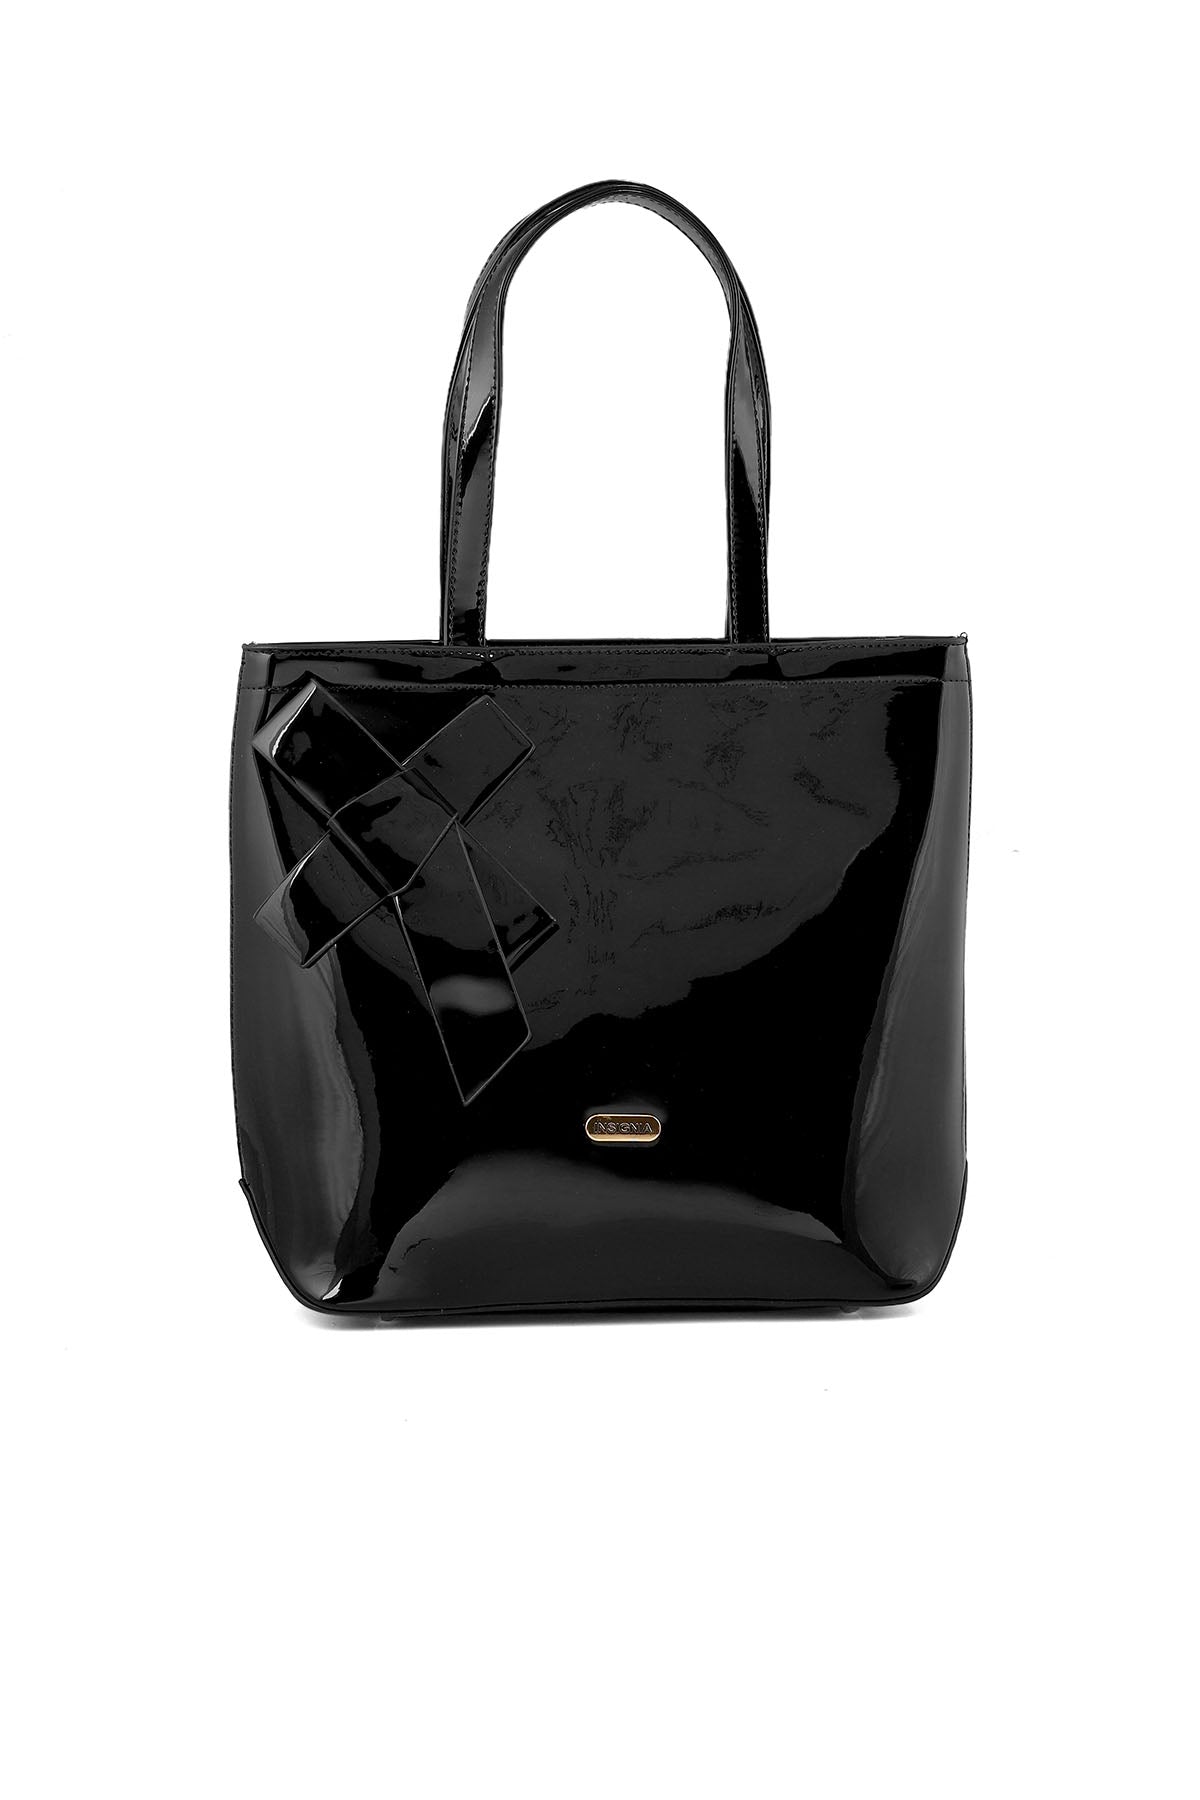 Bucket Hand Bags B15074-Black